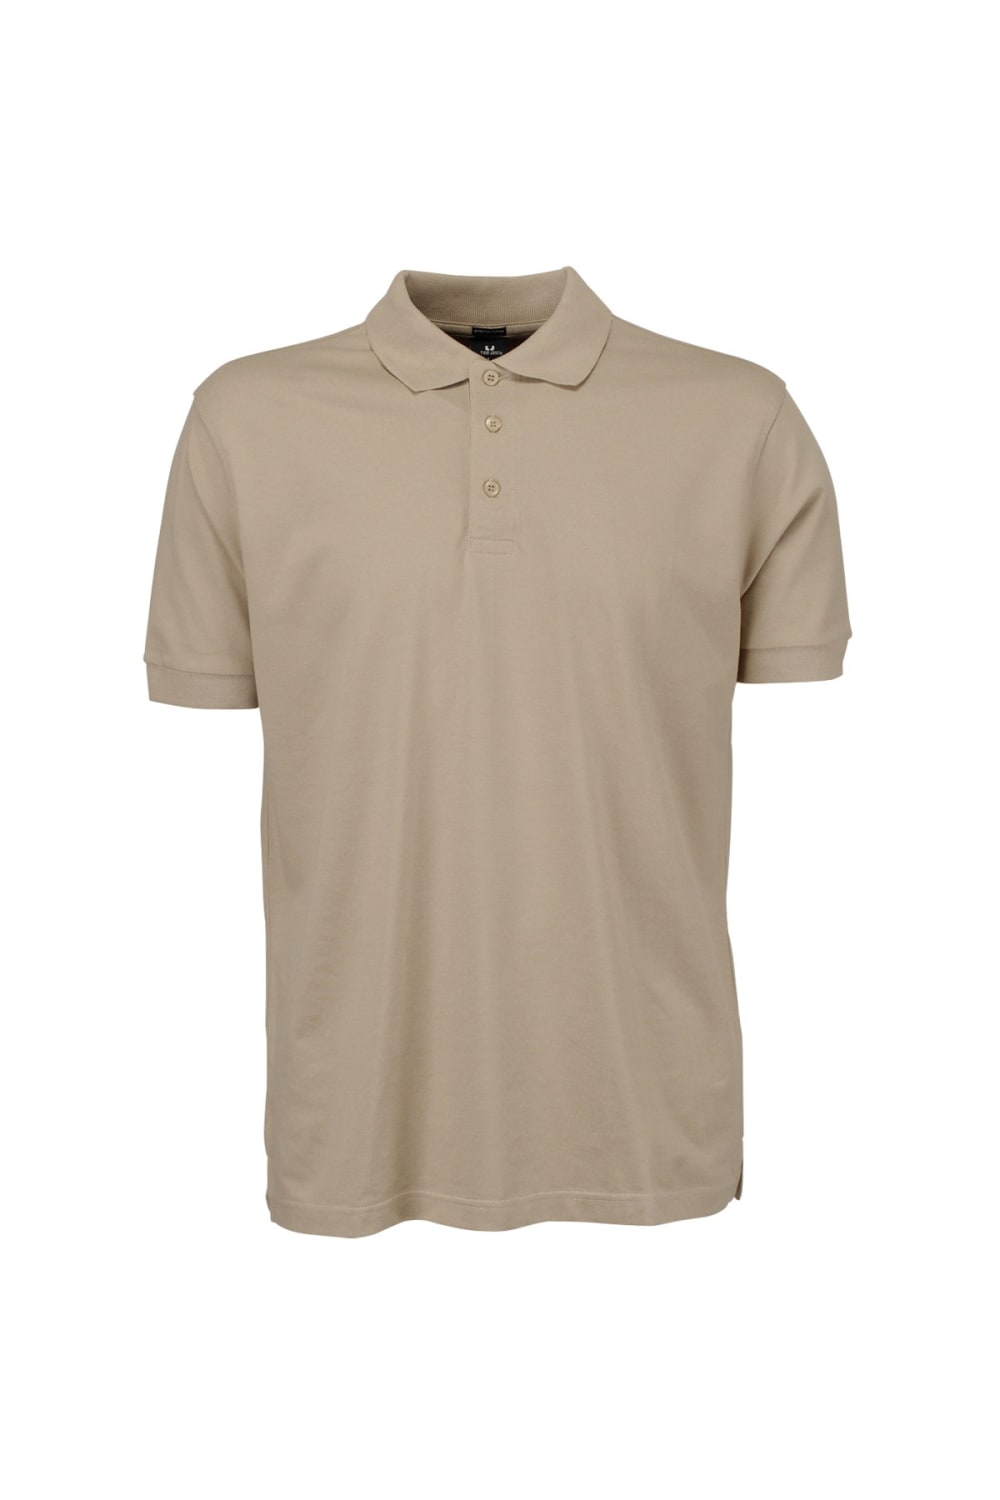 Tee Jays Mens Luxury Stretch Short Sleeve Polo Shirt (Kit)